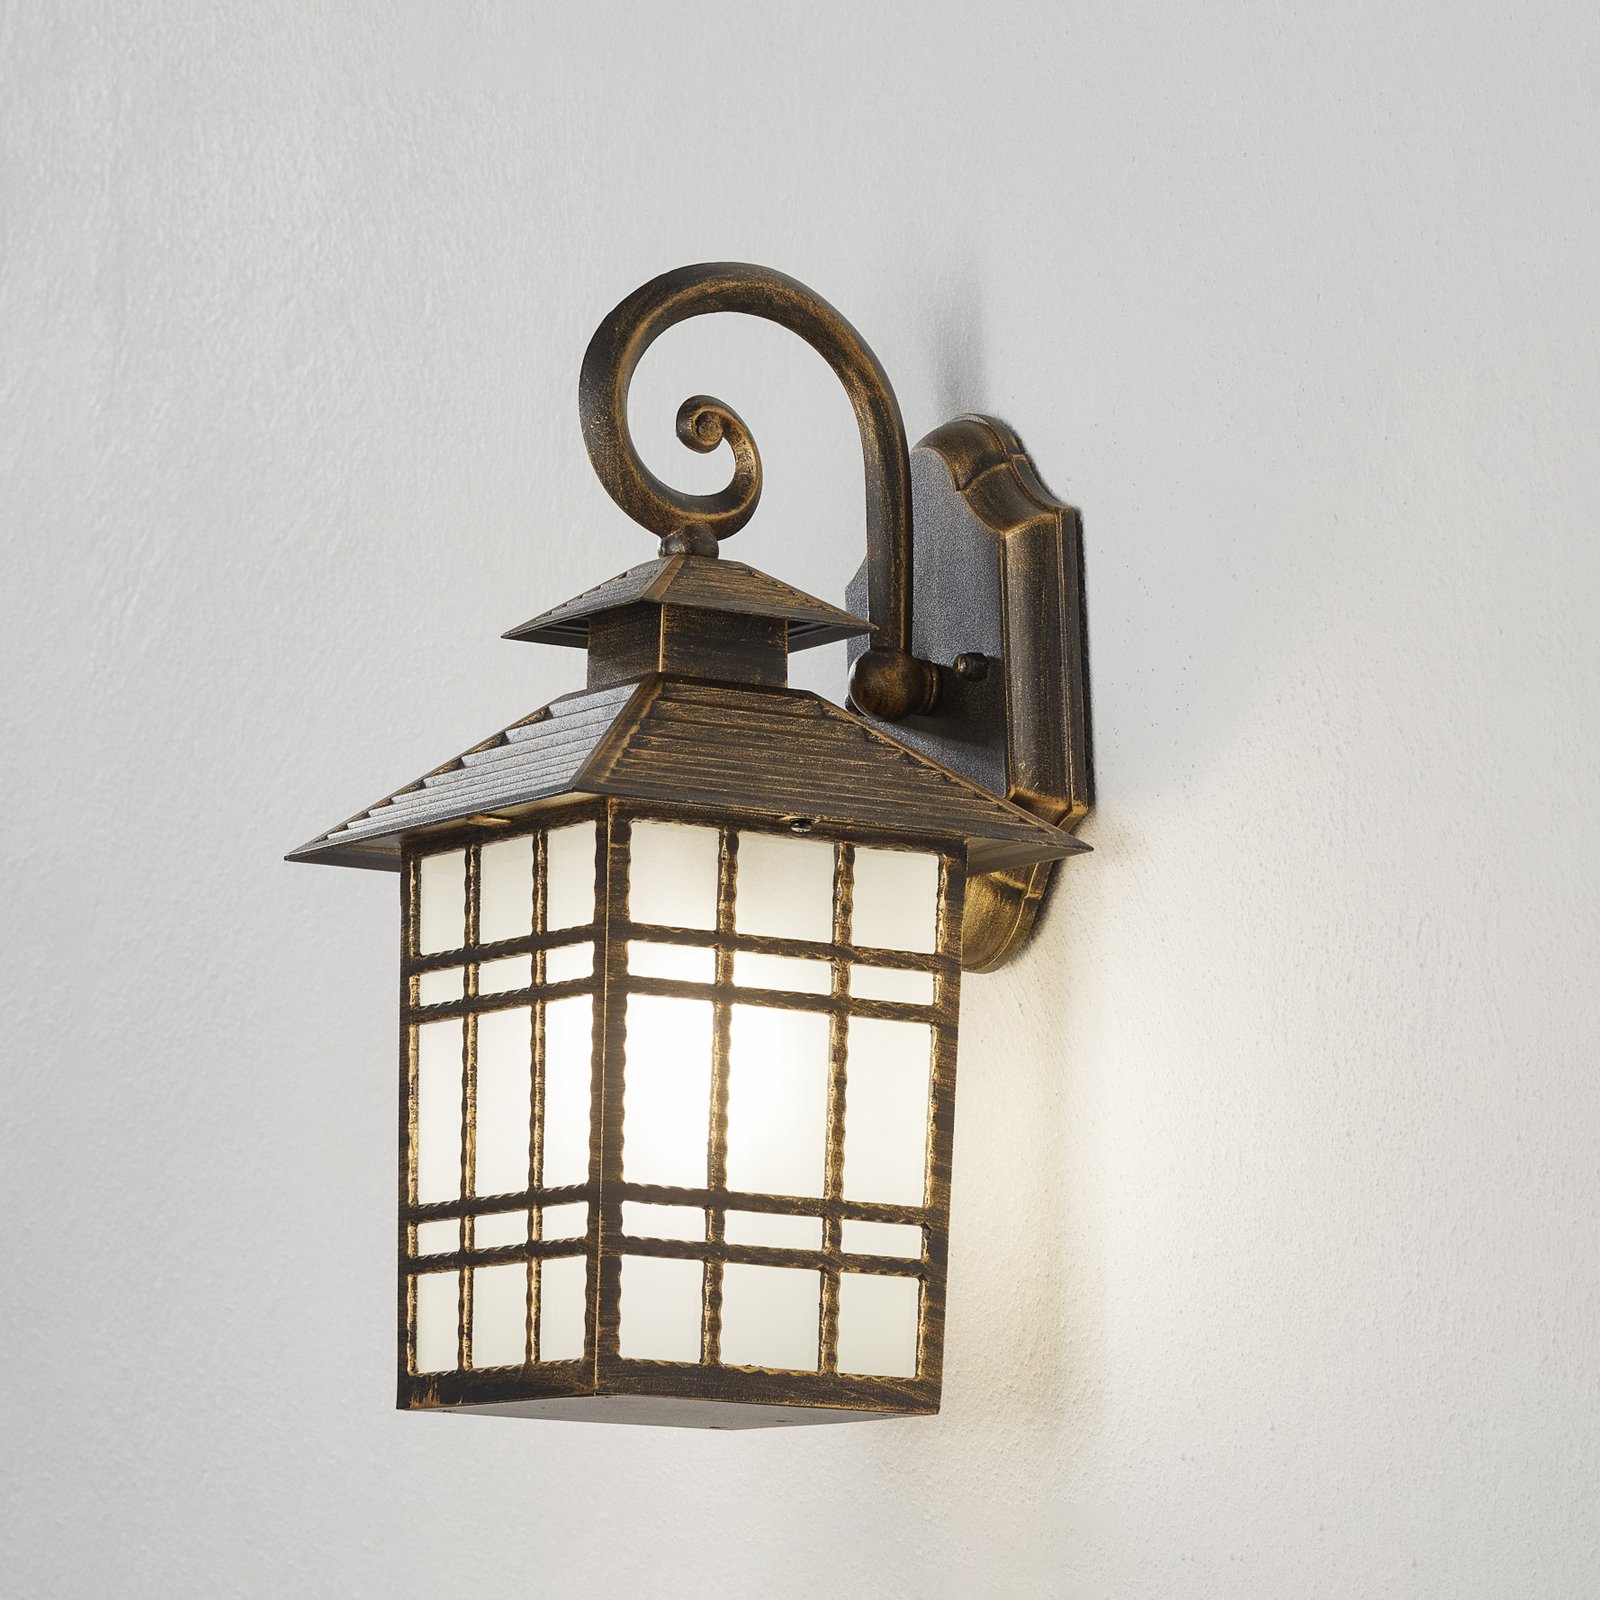 Traditional Ilke outdoor wall light as a lantern